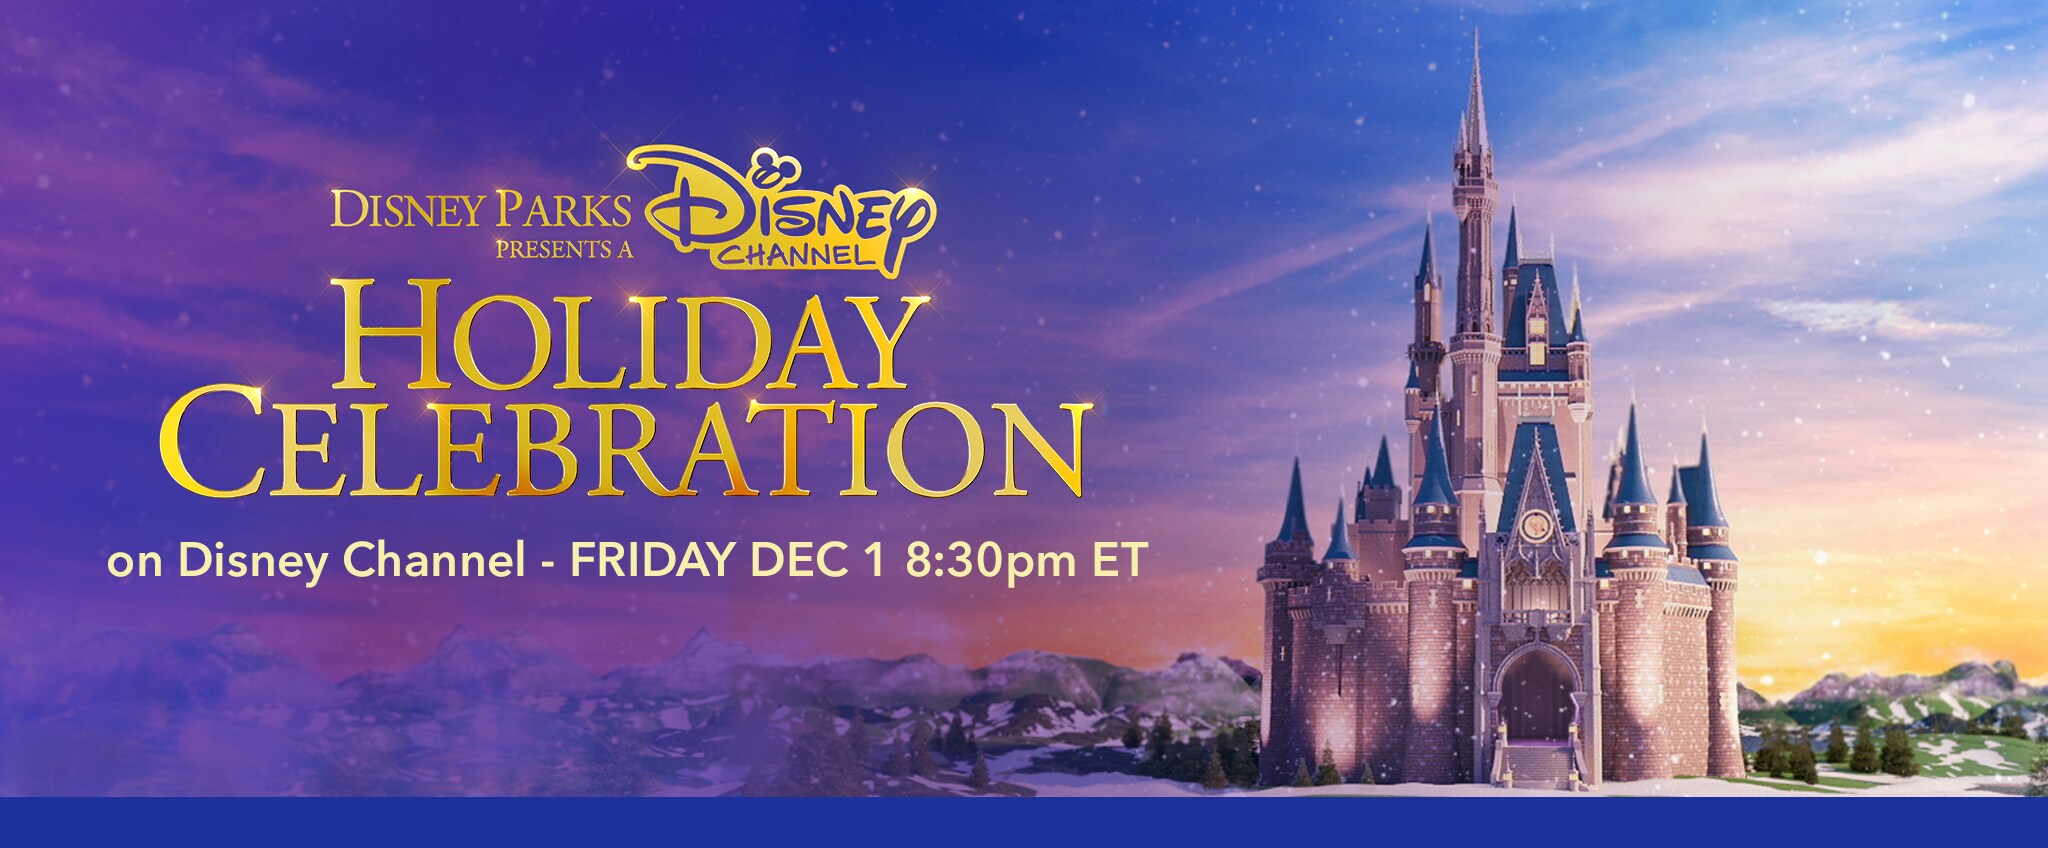 Disney Parks Presents A Disney Channel Holiday Celebration